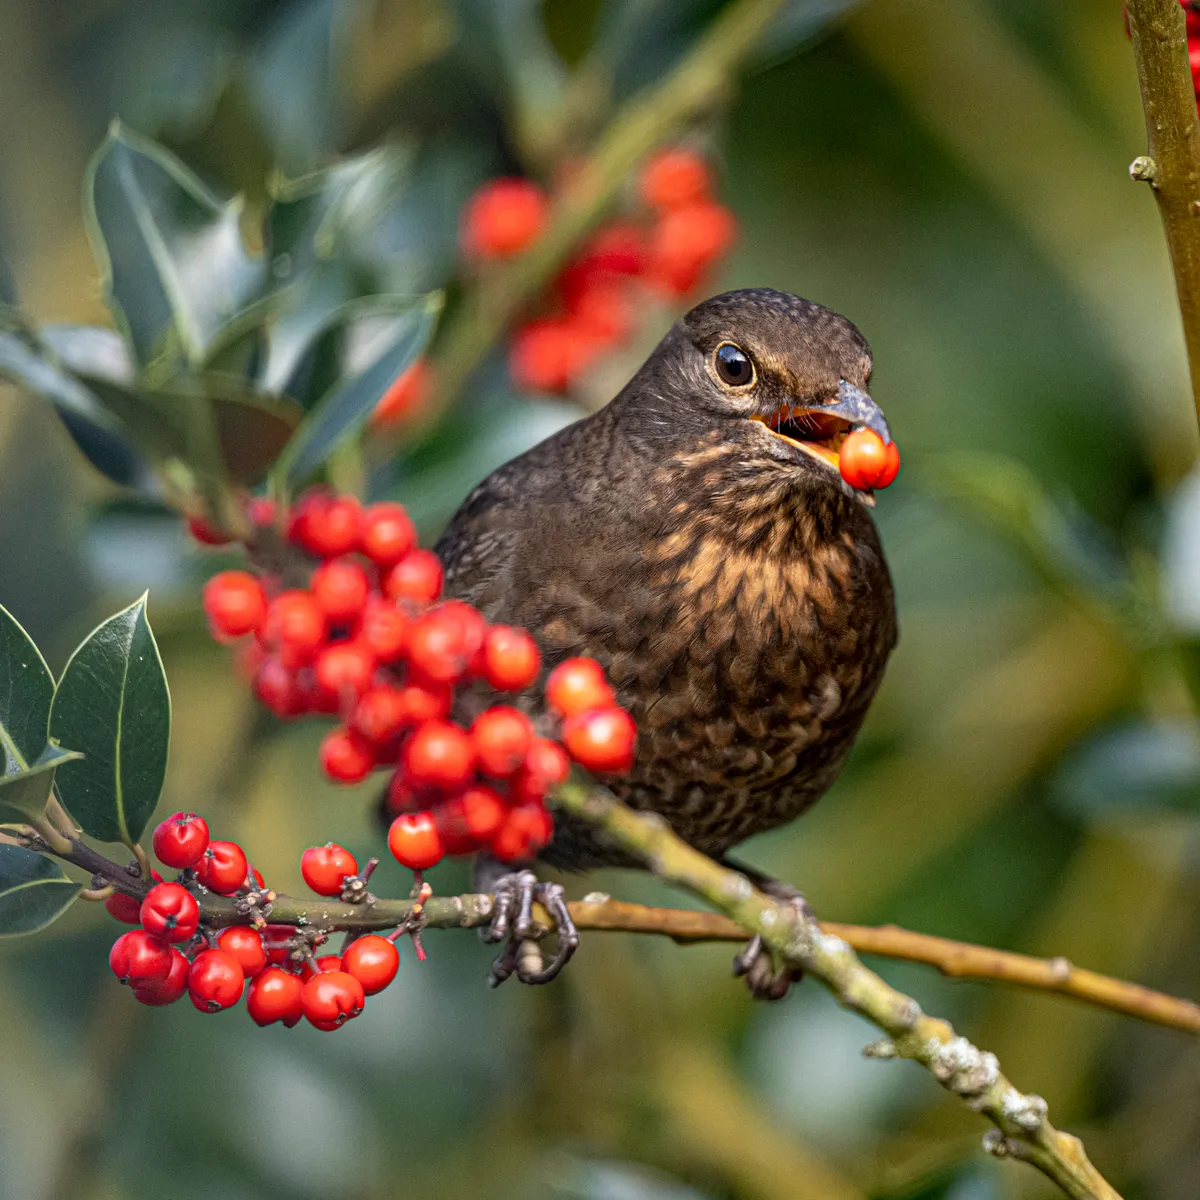 A female blackbird feeding on holly berries. © Michael Roberts/Getty